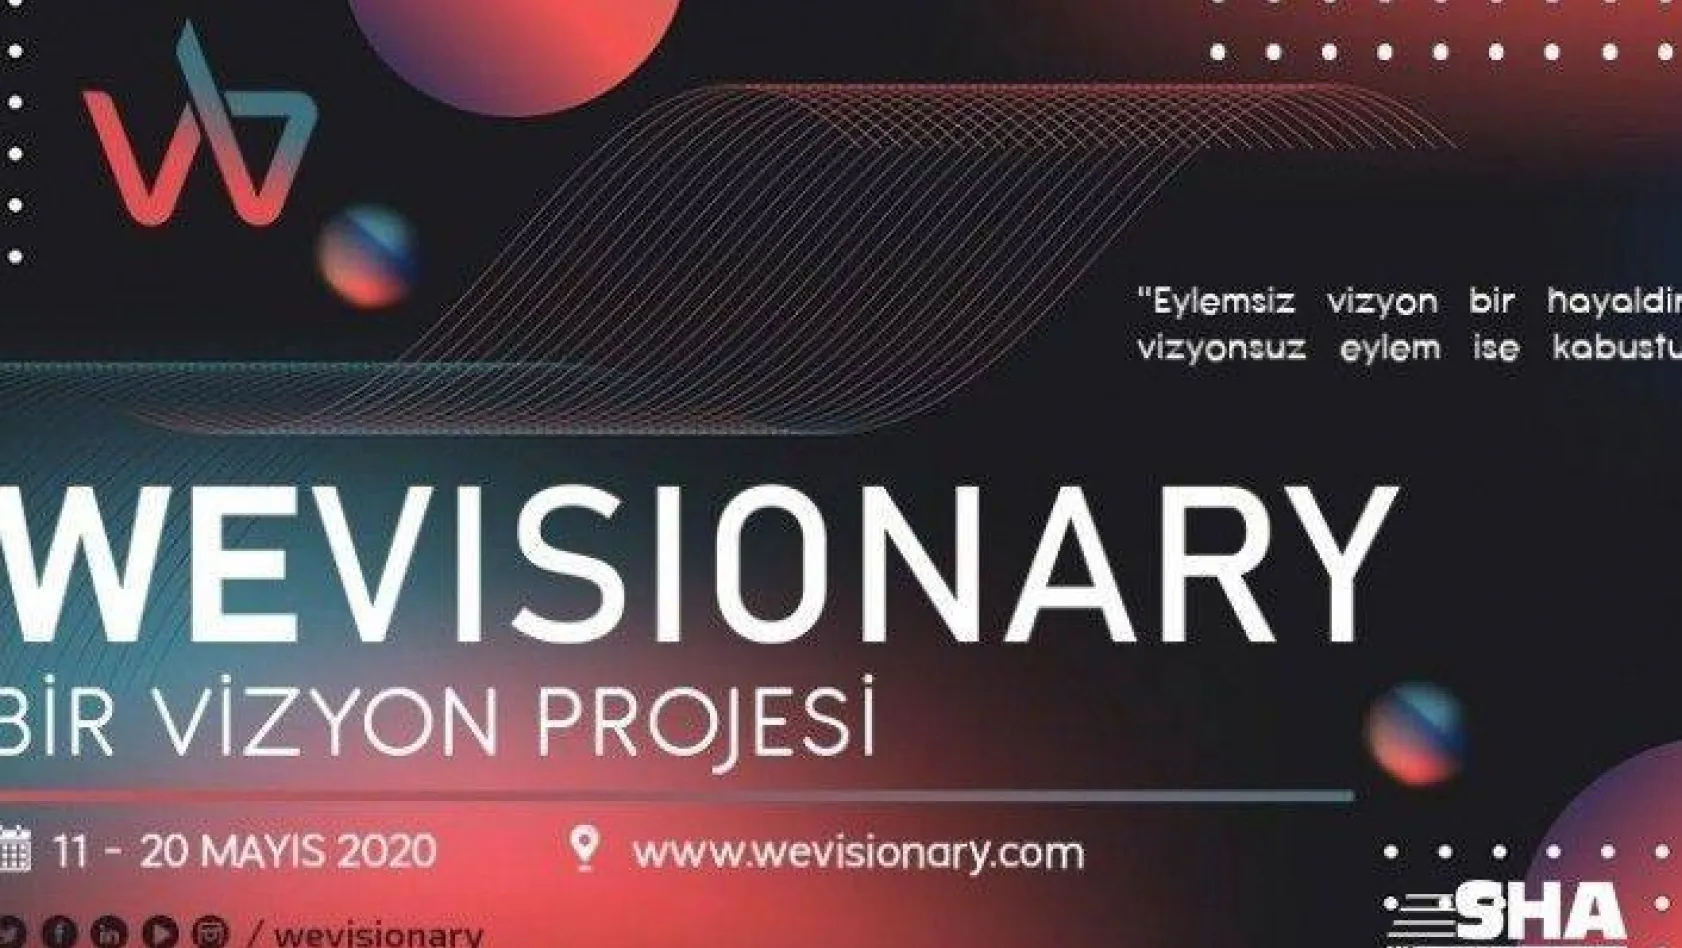 WEVisionary'20 Online Vizyon Projesi başlıyor